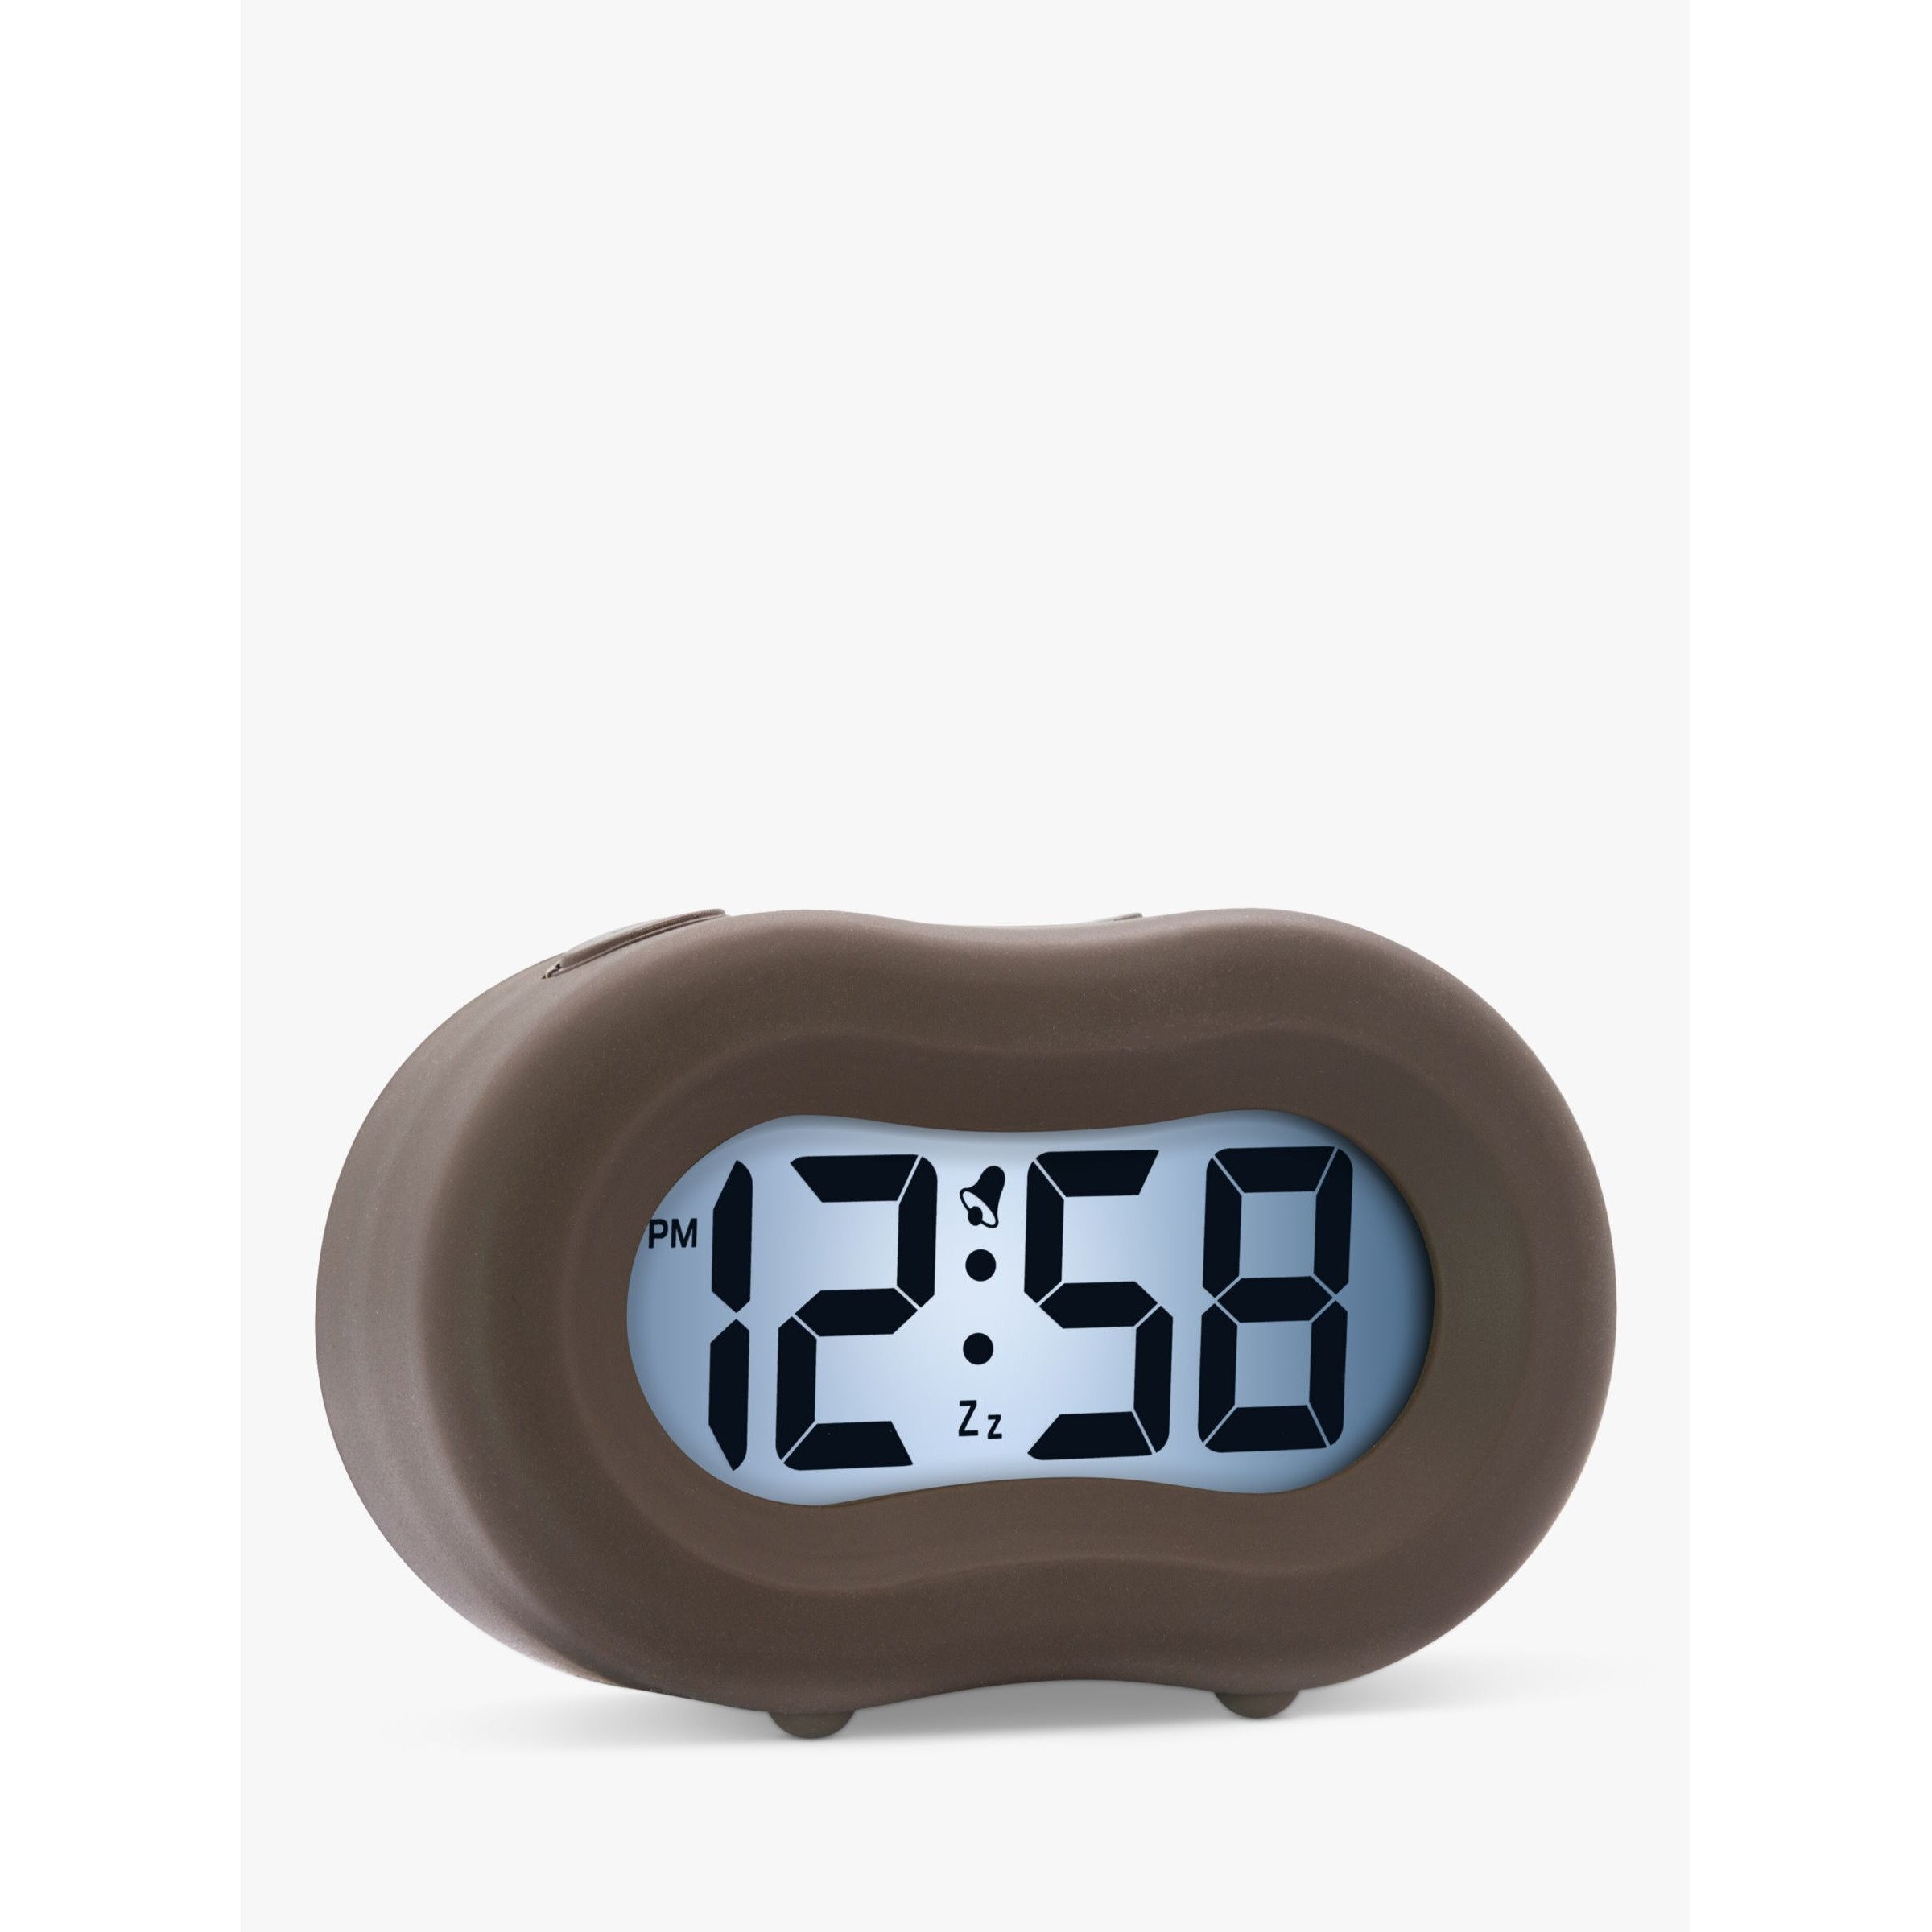 Acctim Nash Smartlite Soft-Touch Case Digital LCD Alarm Clock - image 1